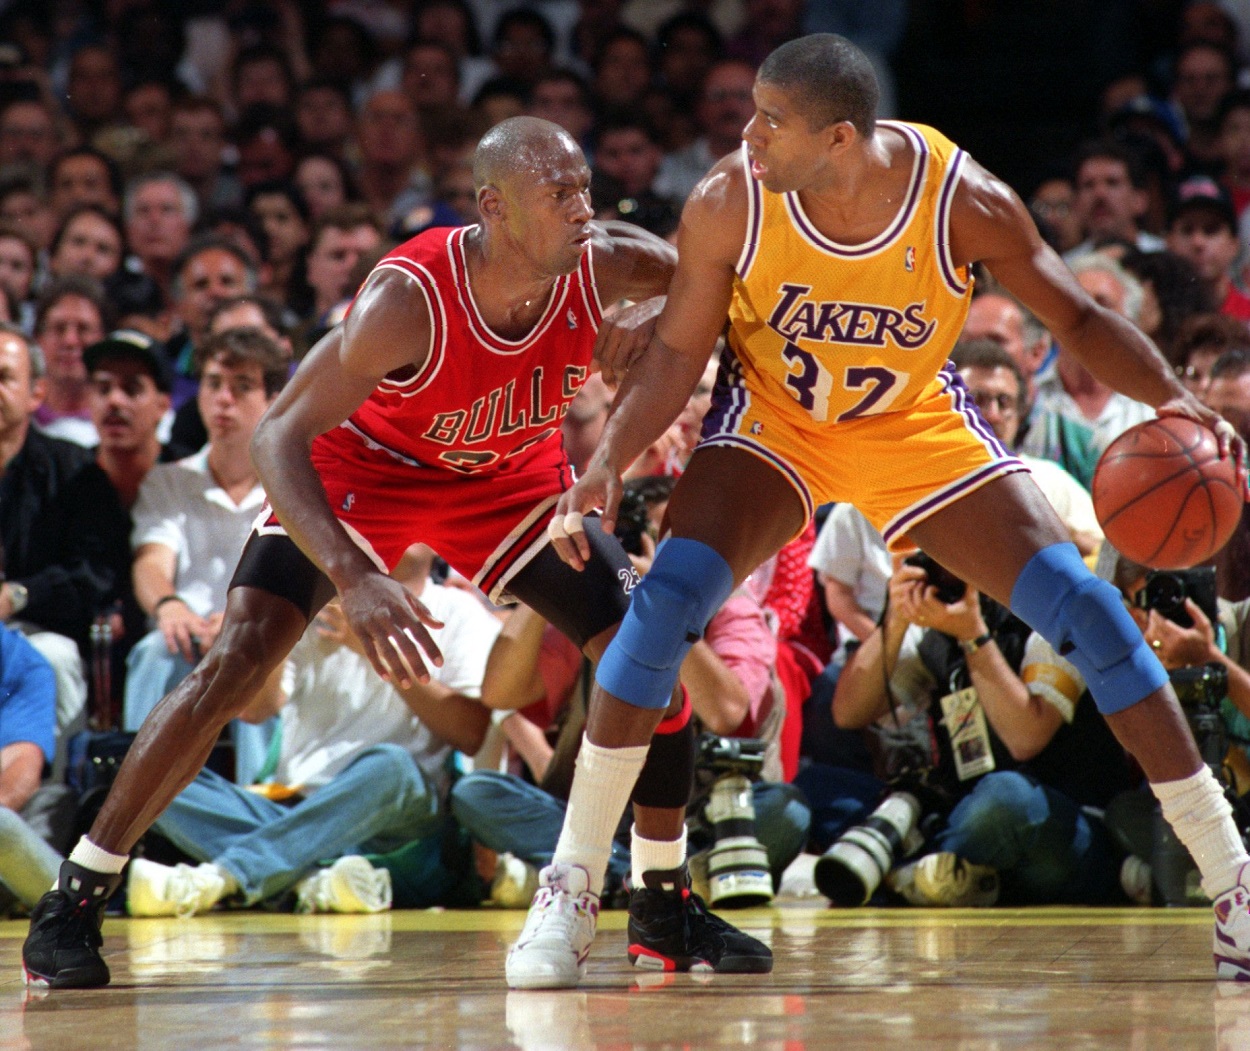 Chicago Bulls: Michael Jordan's Friday the 13th Dominance